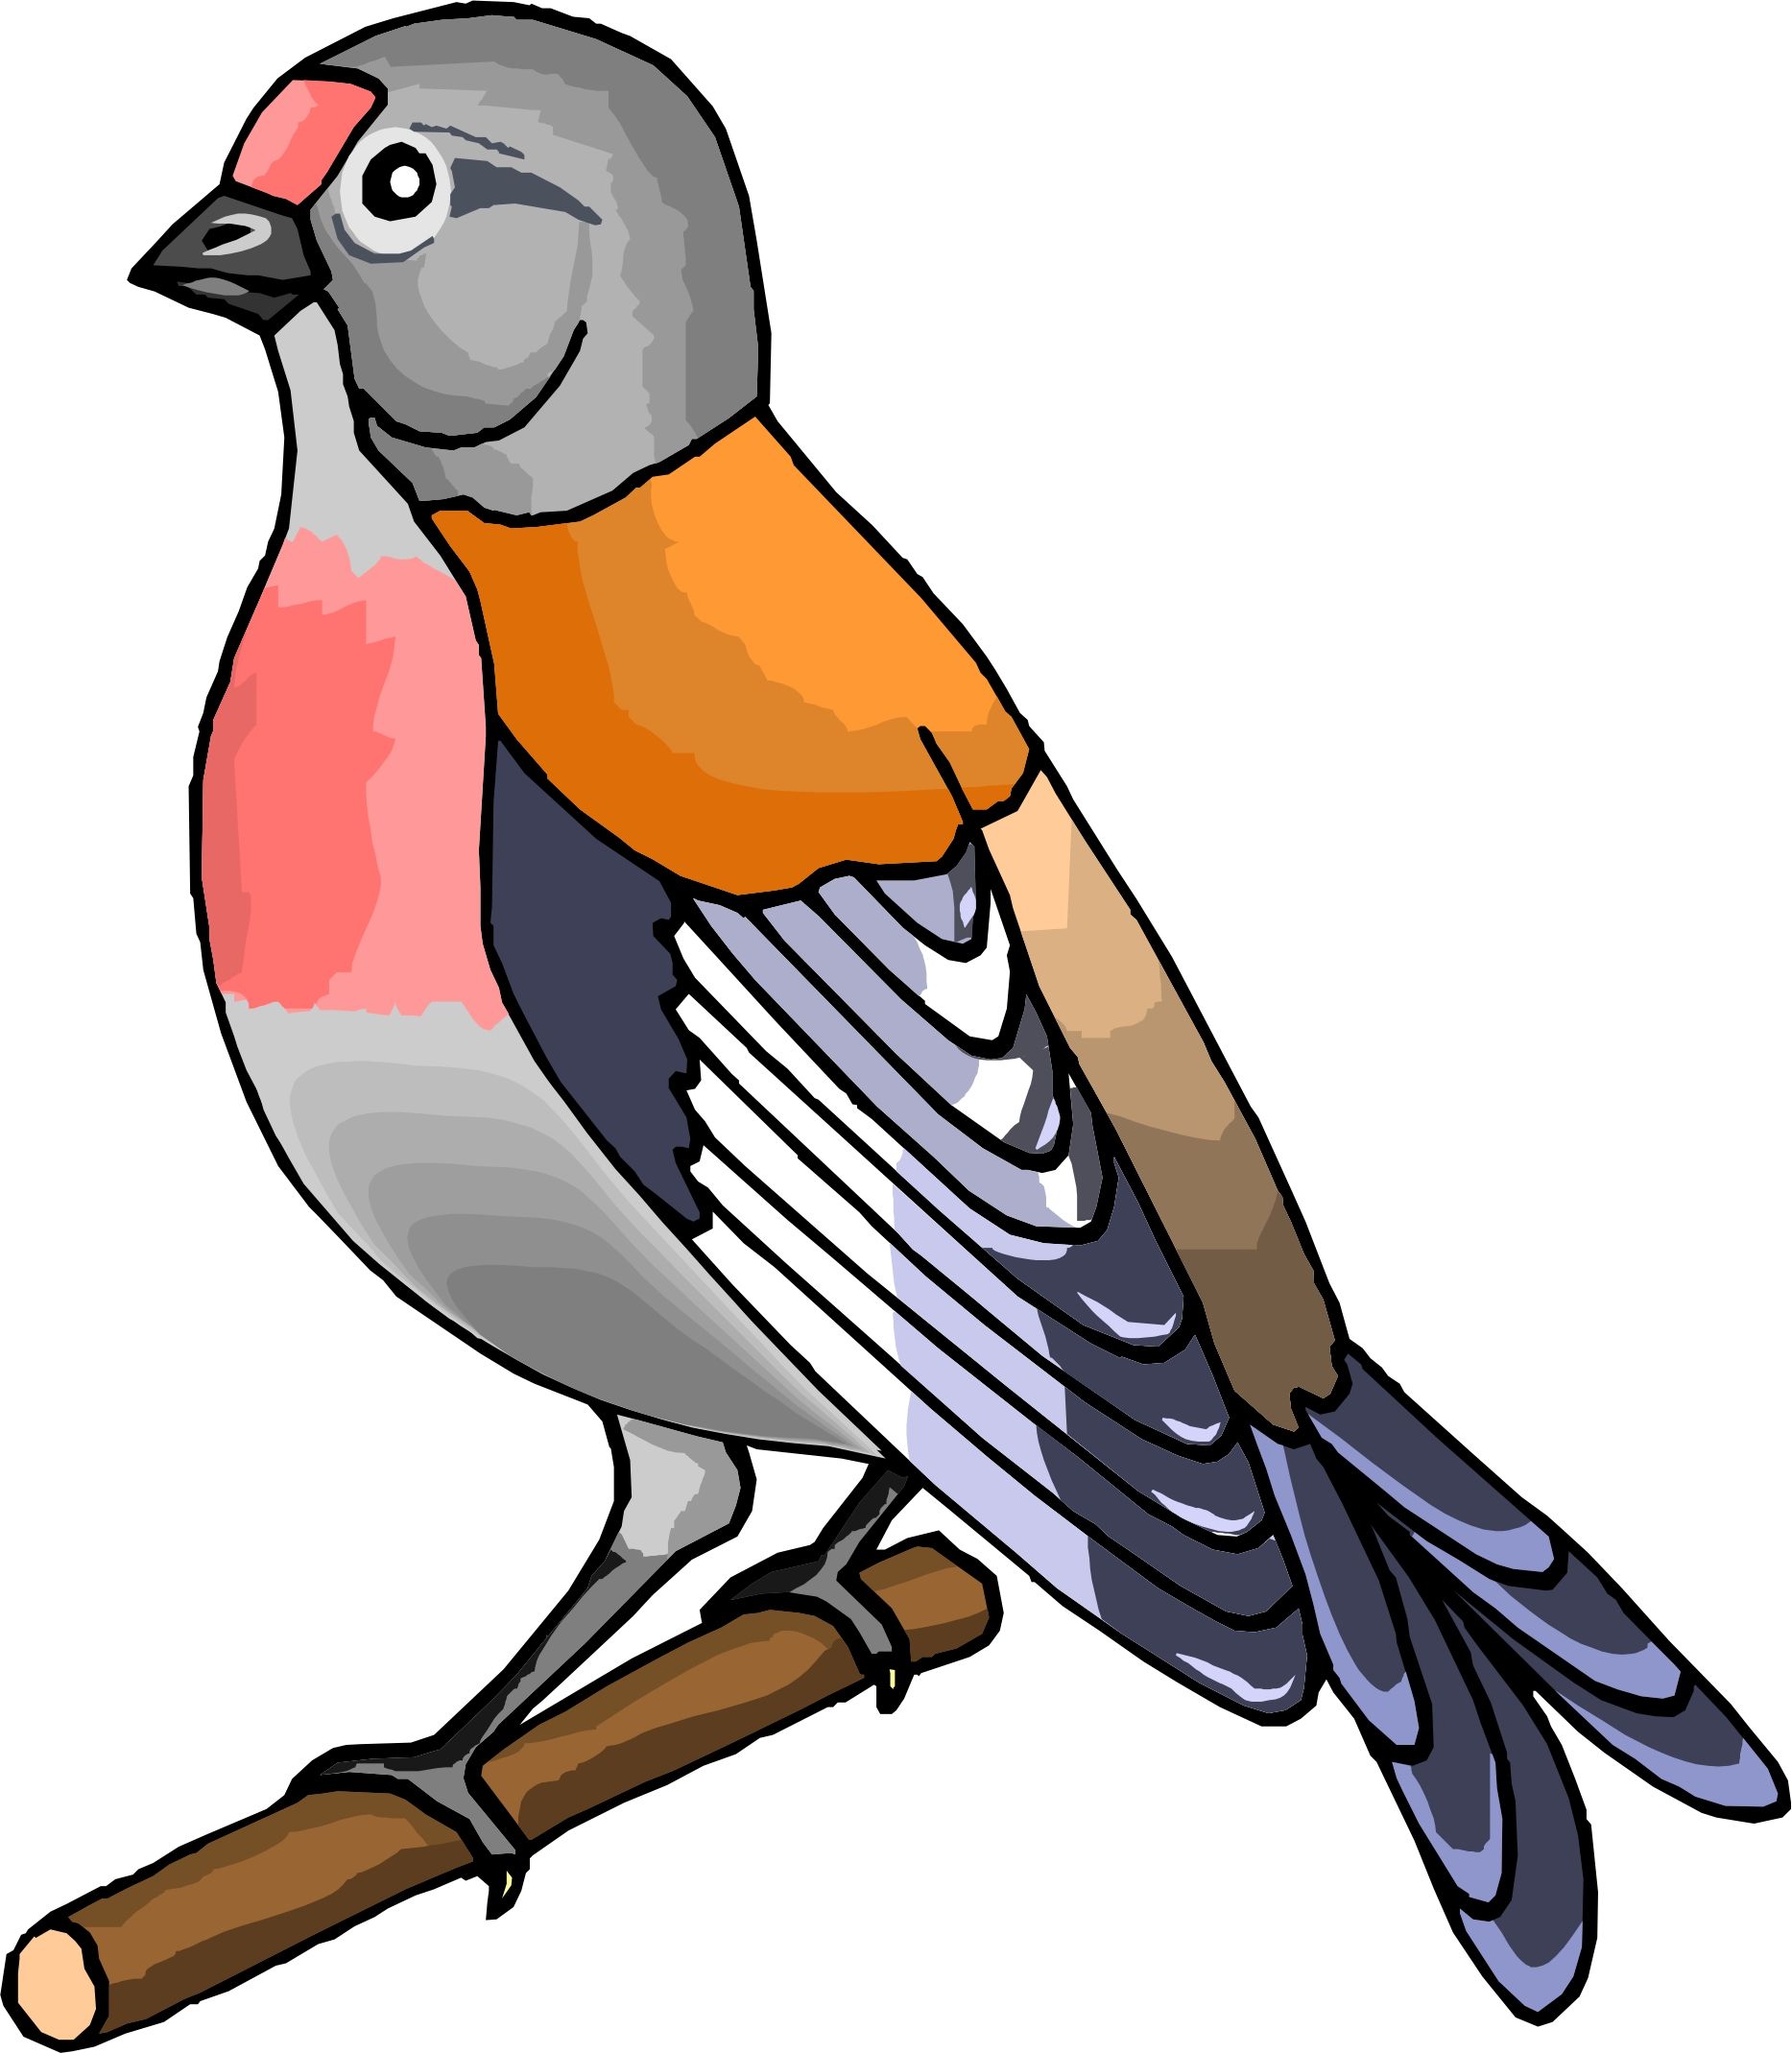 Free Pics Of Cartoon Birds, Download Free Pics Of Cartoon Birds png image, Free ClipArts on Clipart Library